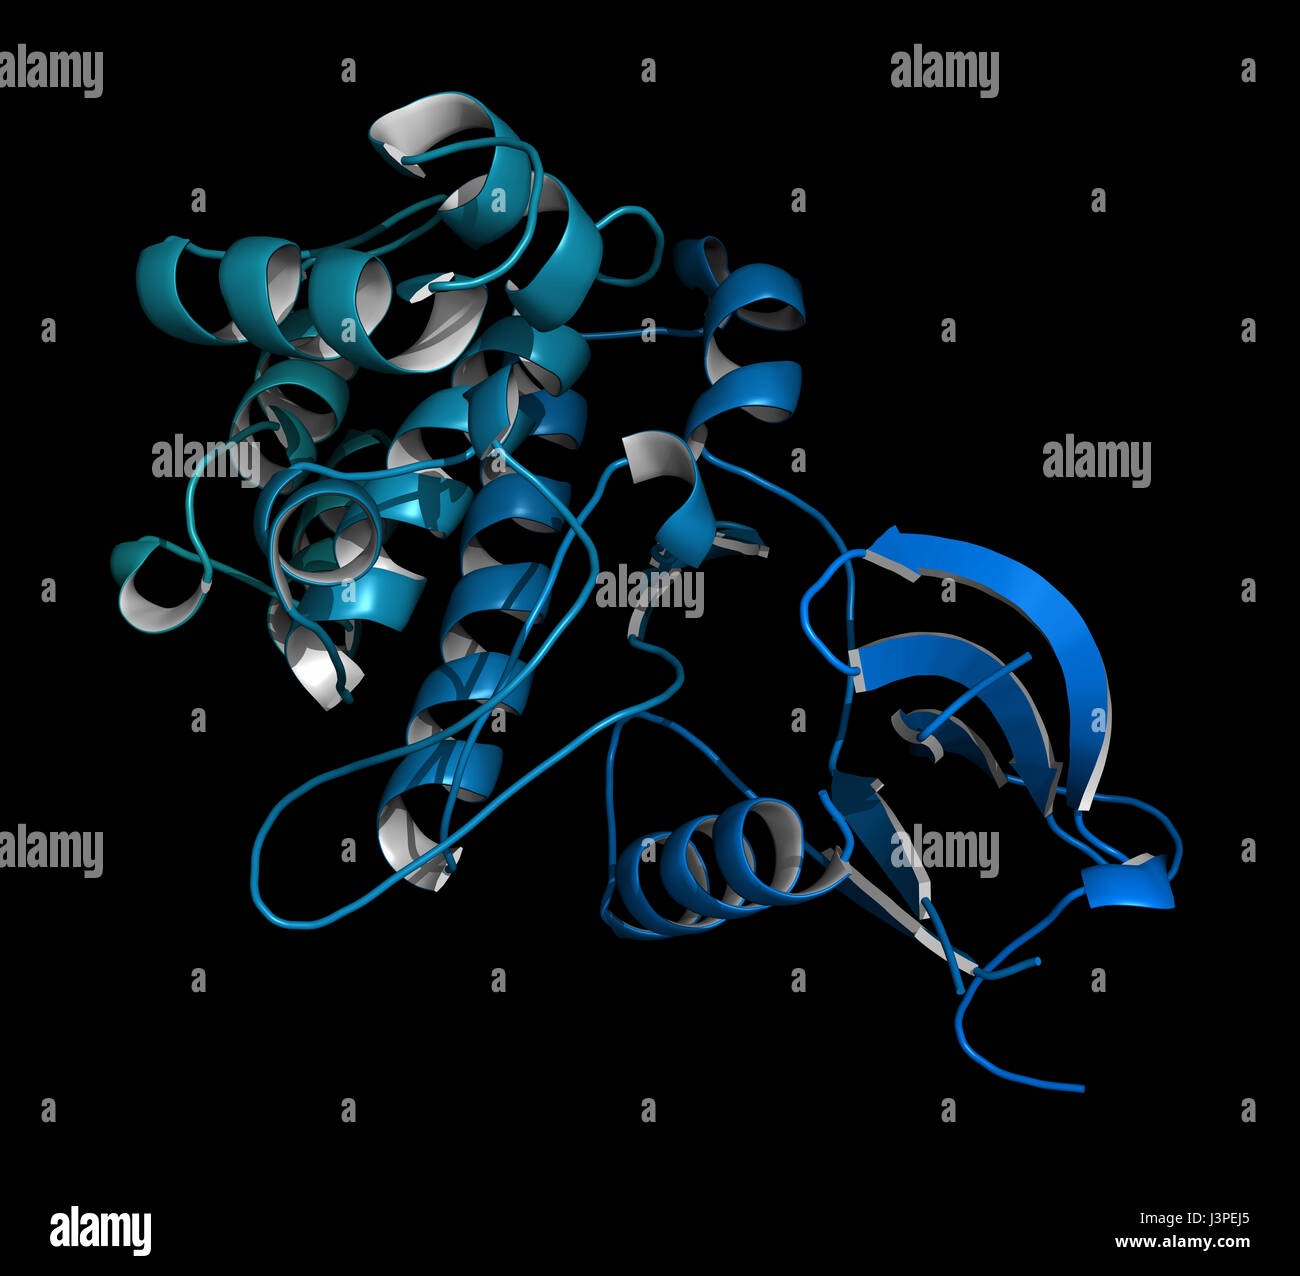 Janus kinase 1 protein. Part of JAK-STAT signalling pathway and drug target. Cartoon representation. N-to-C gradient coloring. Stock Photo